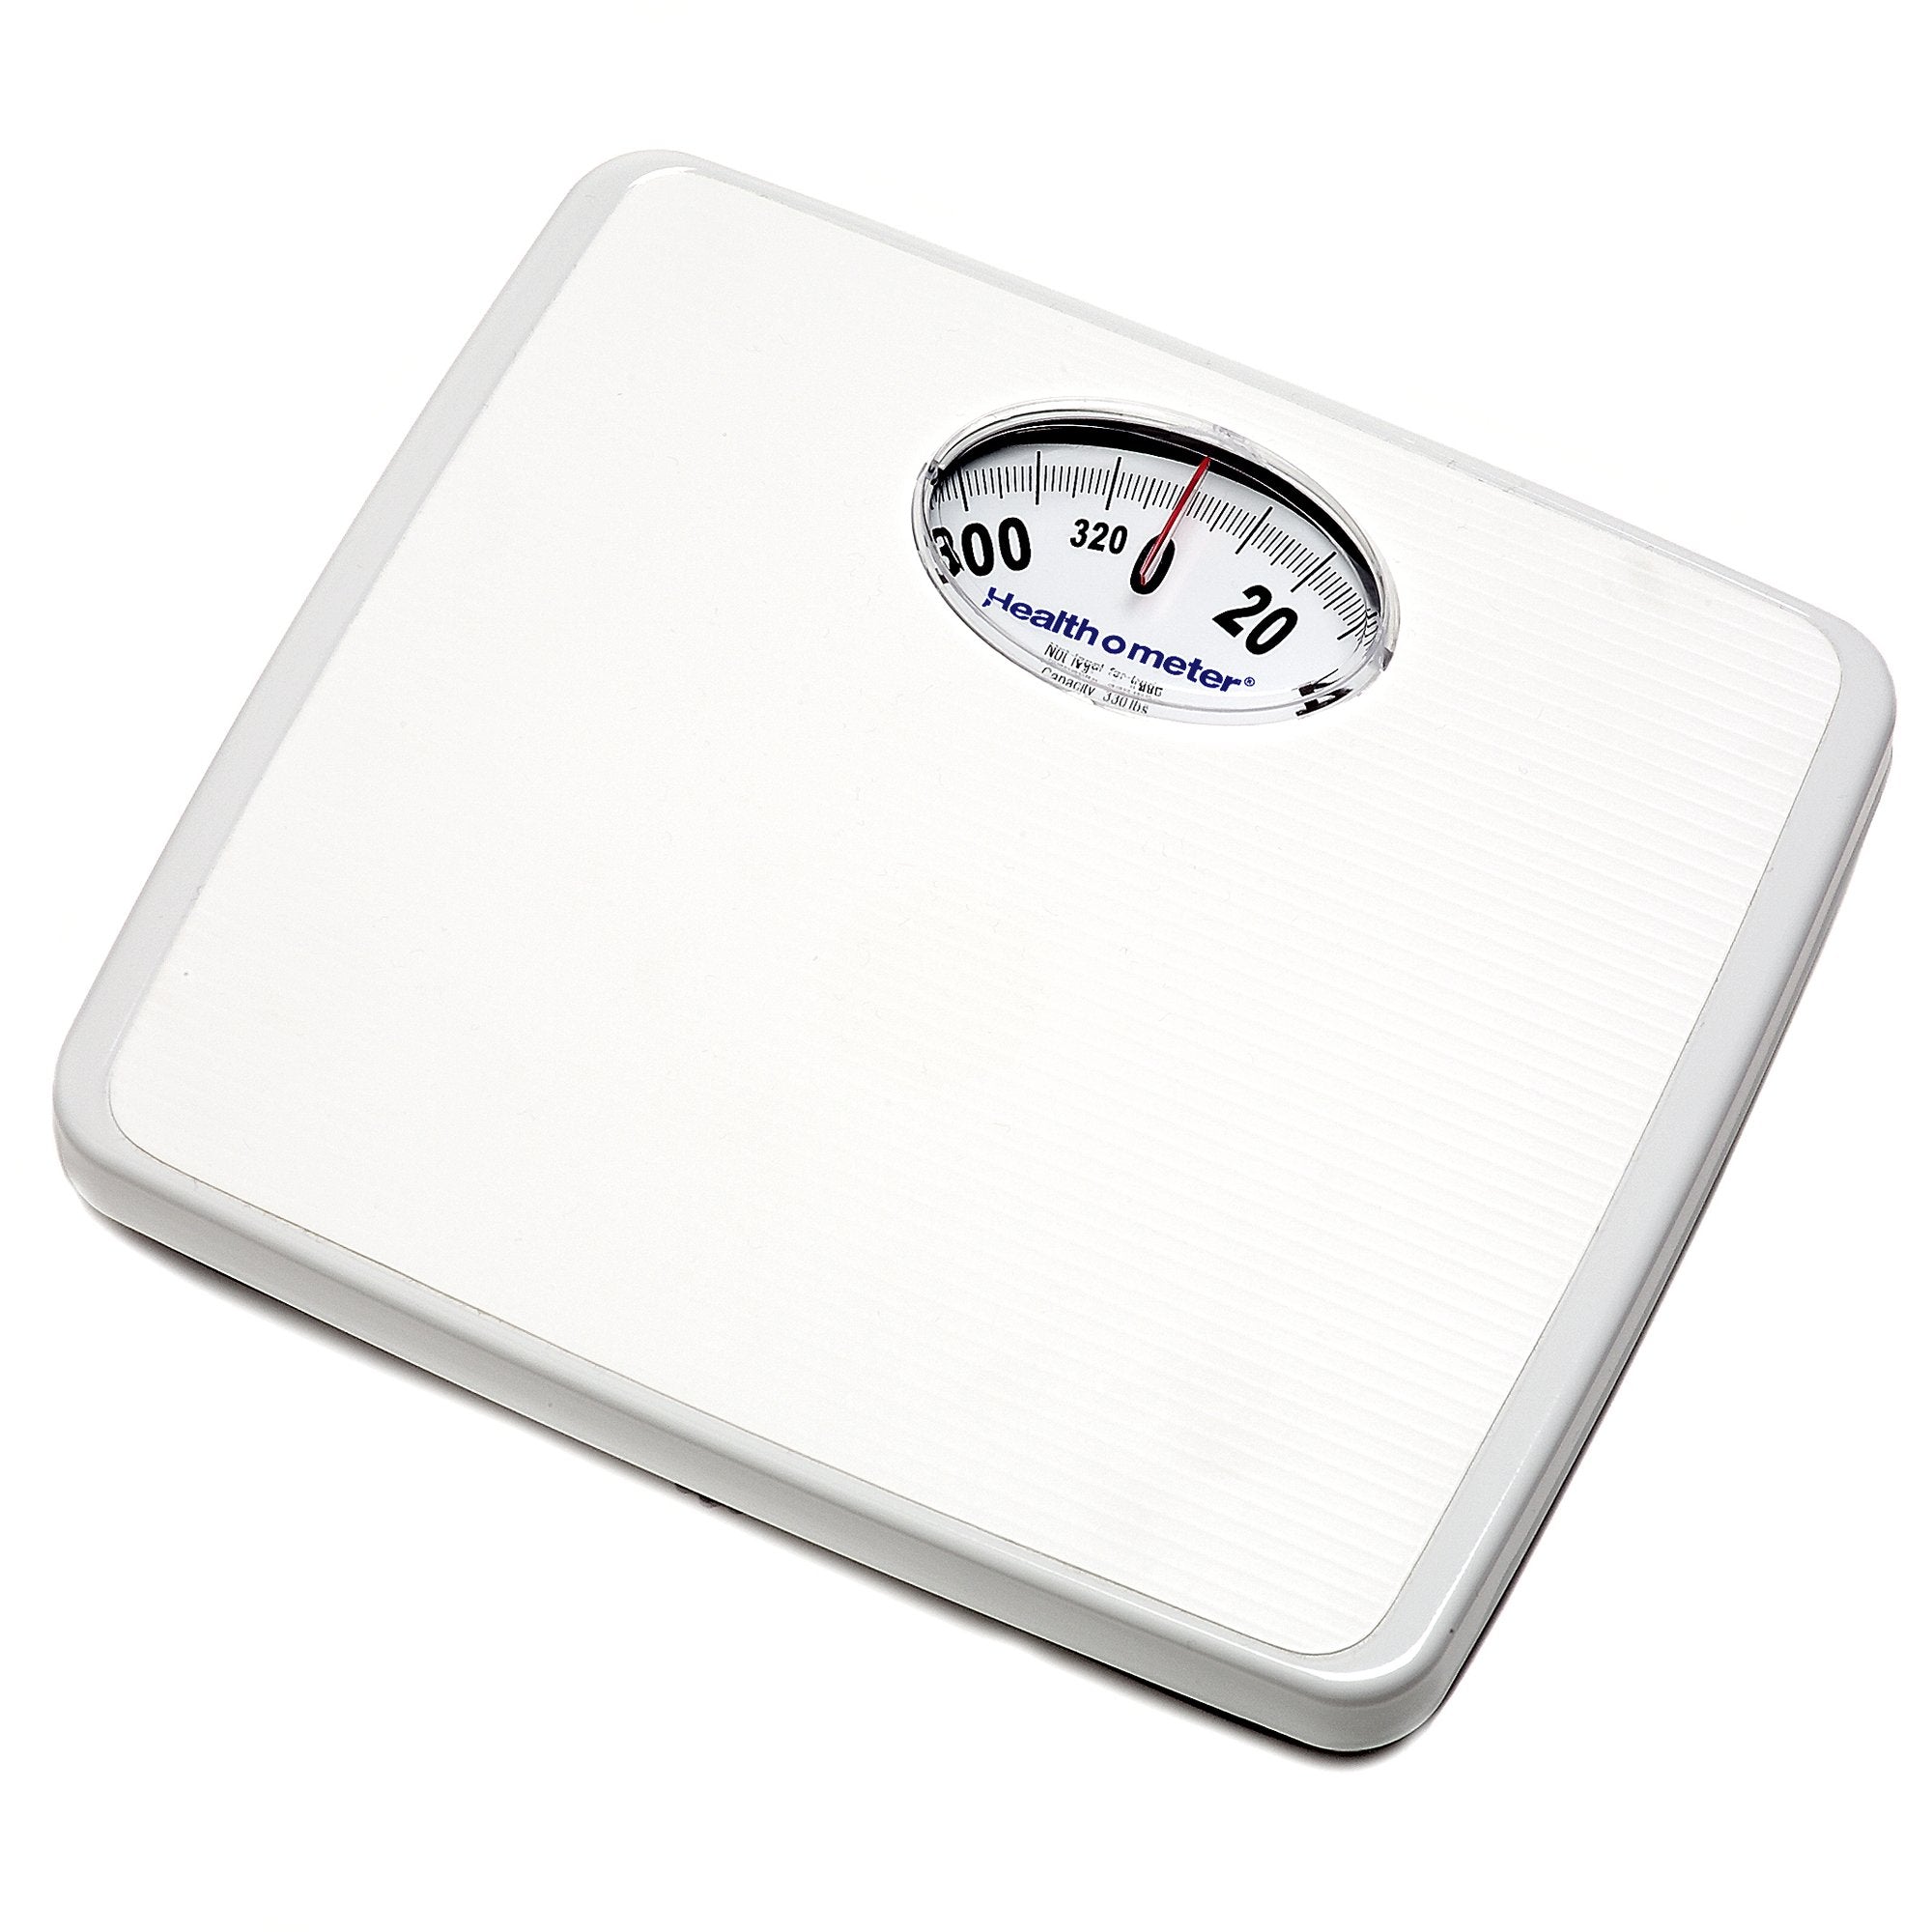 Floor Scale Health O Meter Dial Display 330 lbs. Capacity White Analog